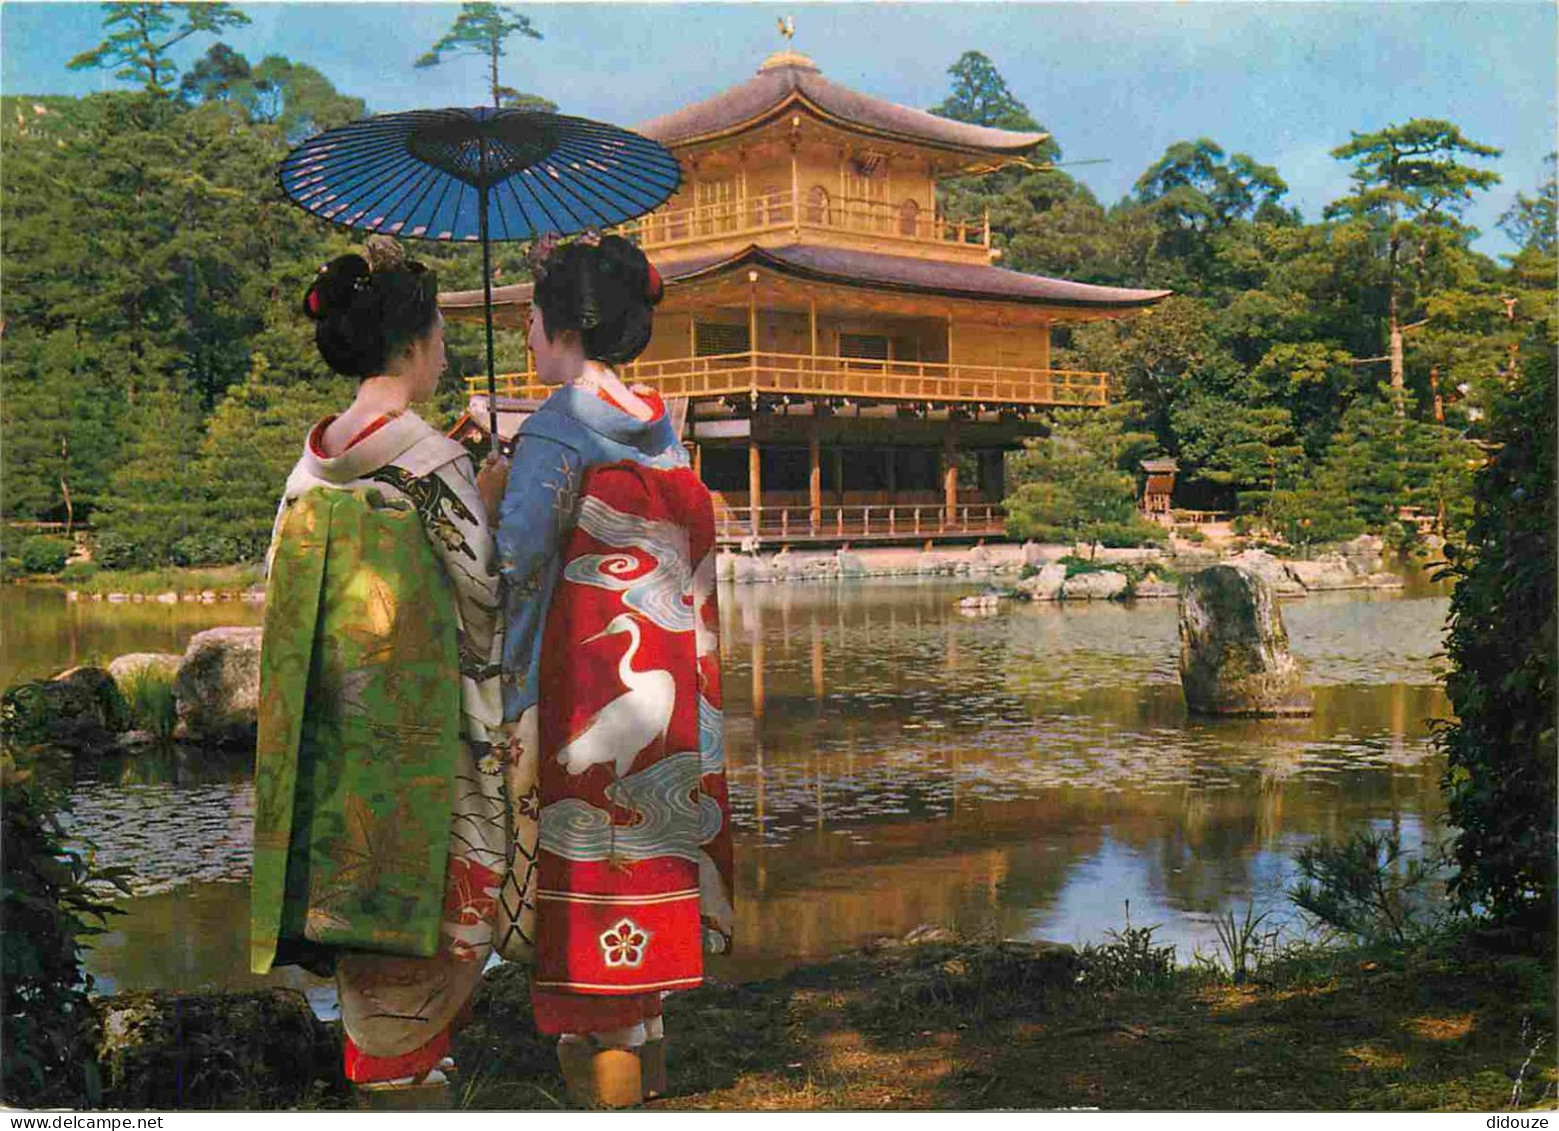 Japon - Kyoto - Maiko At Golden Pavilion - Femmes En Costumes Traditionnels - Folklore - Scène Et Types - Nippon - Japan - Kyoto